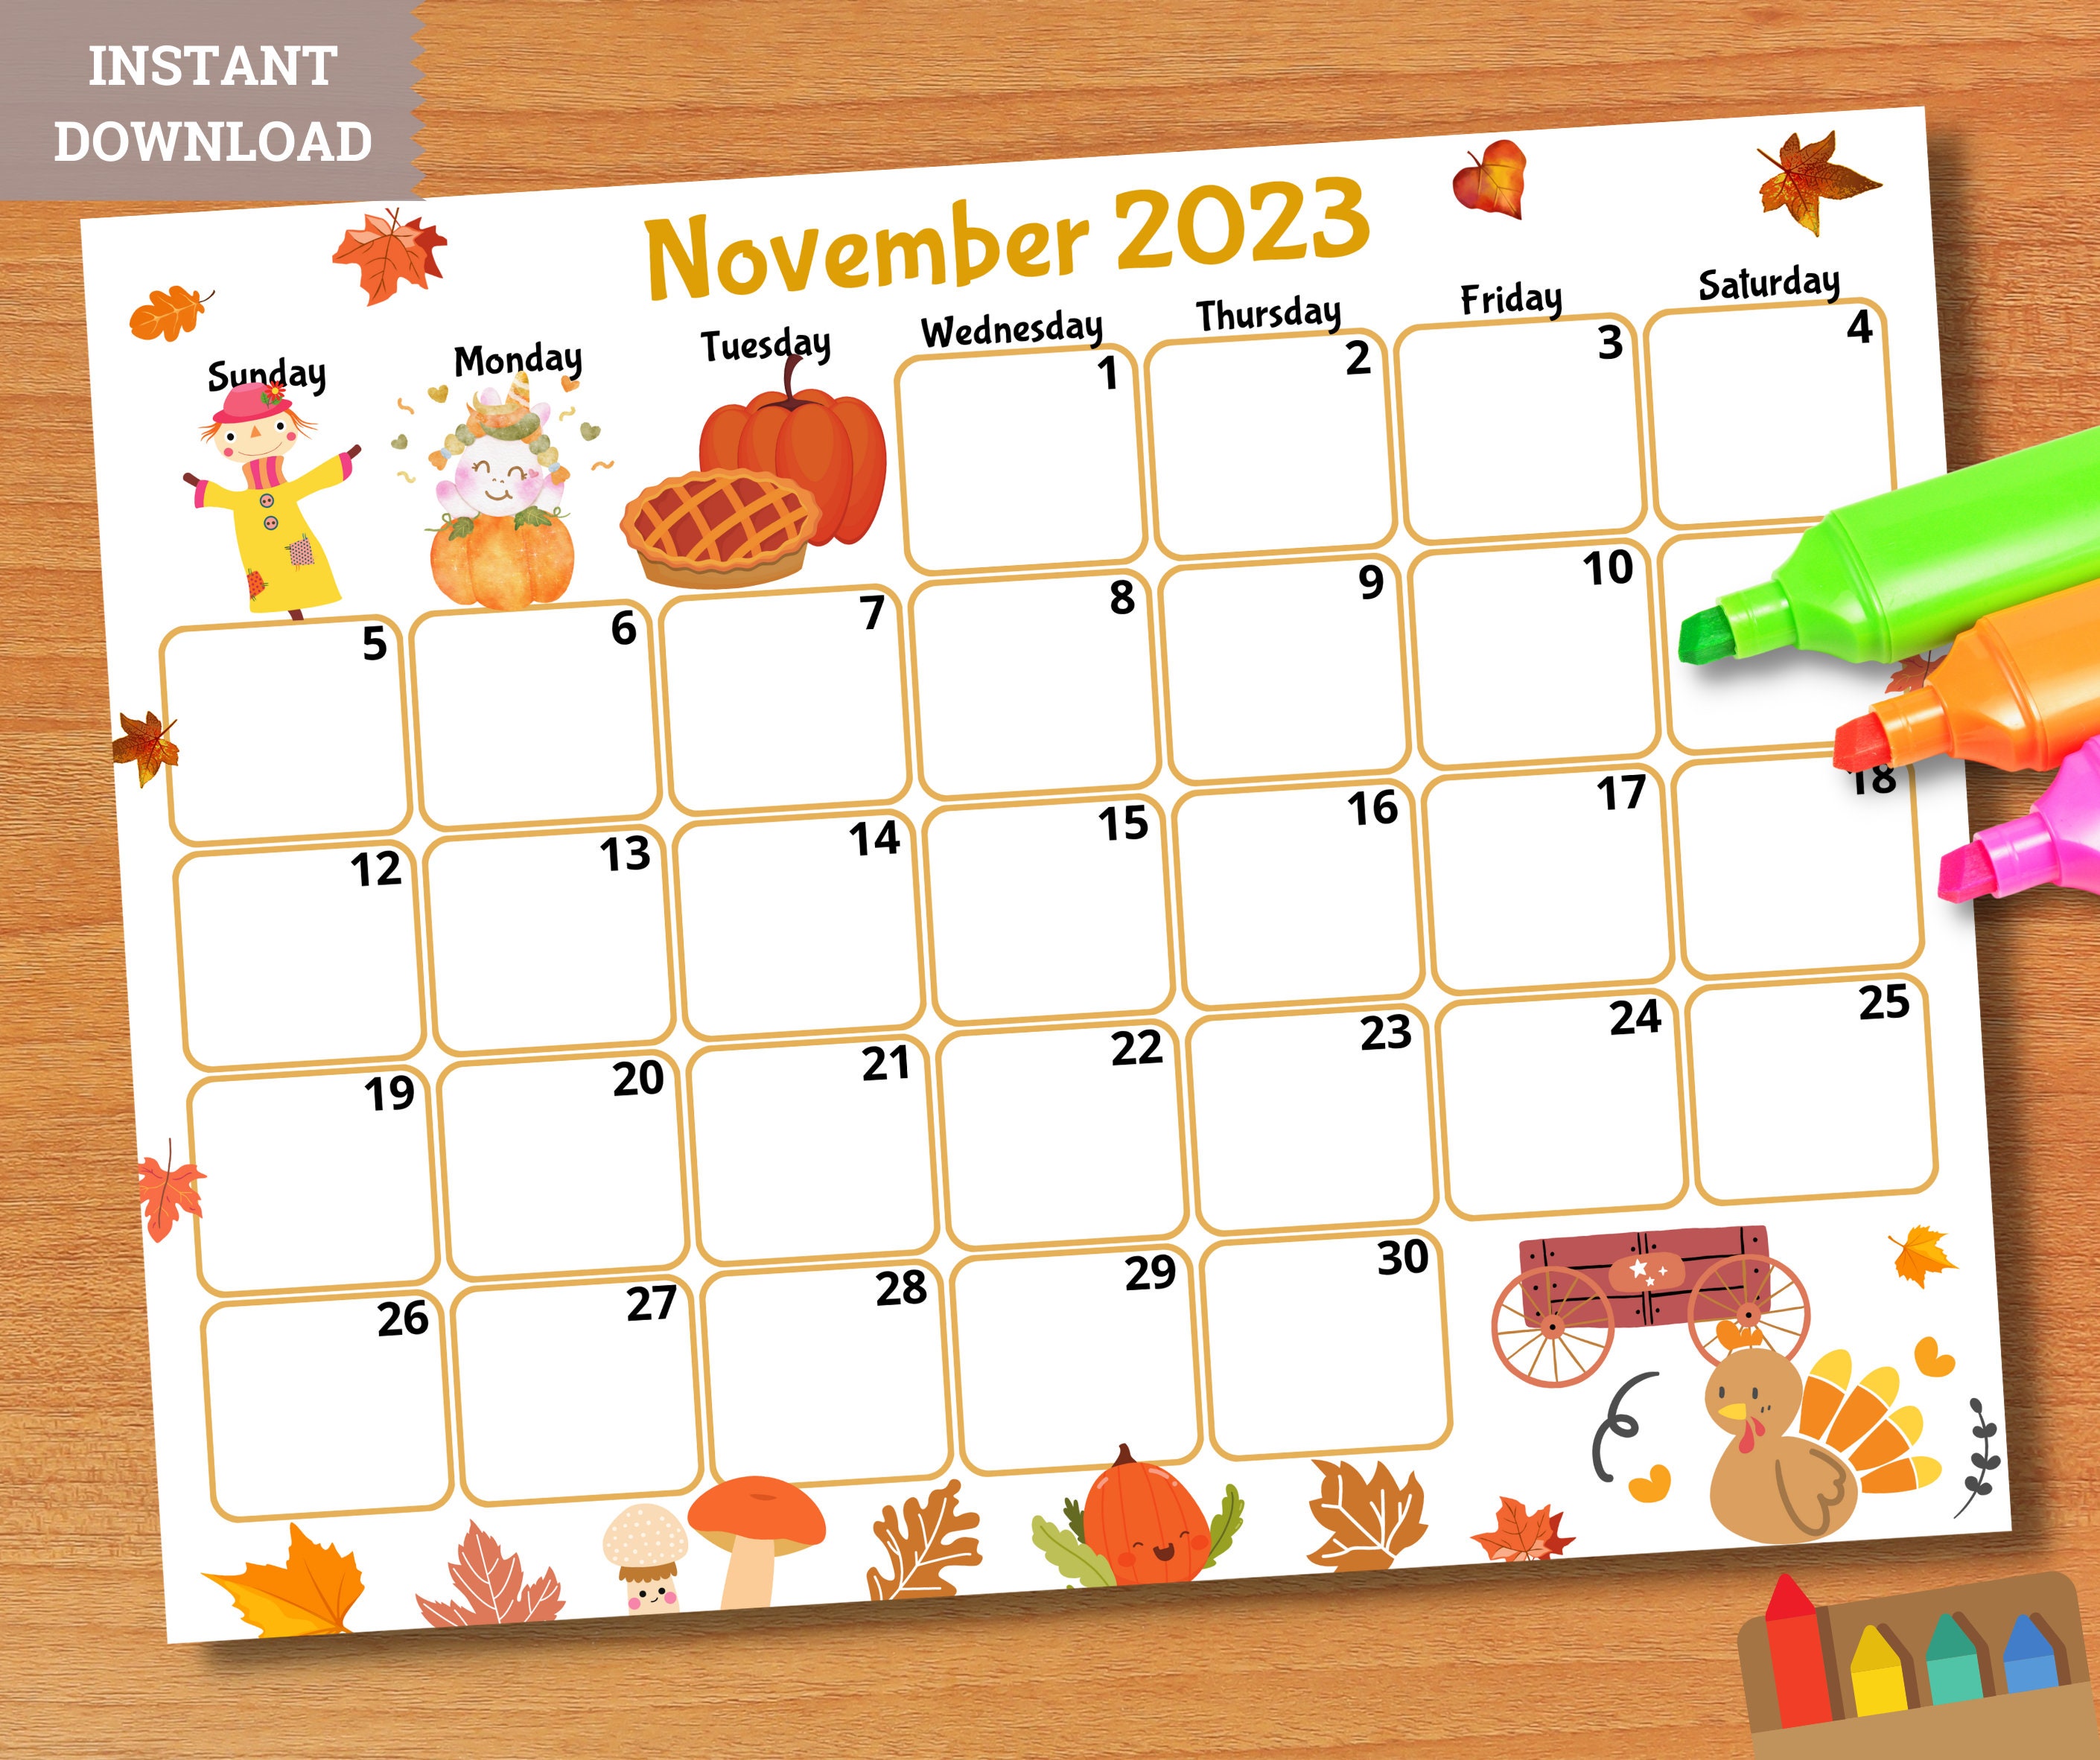 november-2023-calendar-monthly-printable-get-calender-2023-update